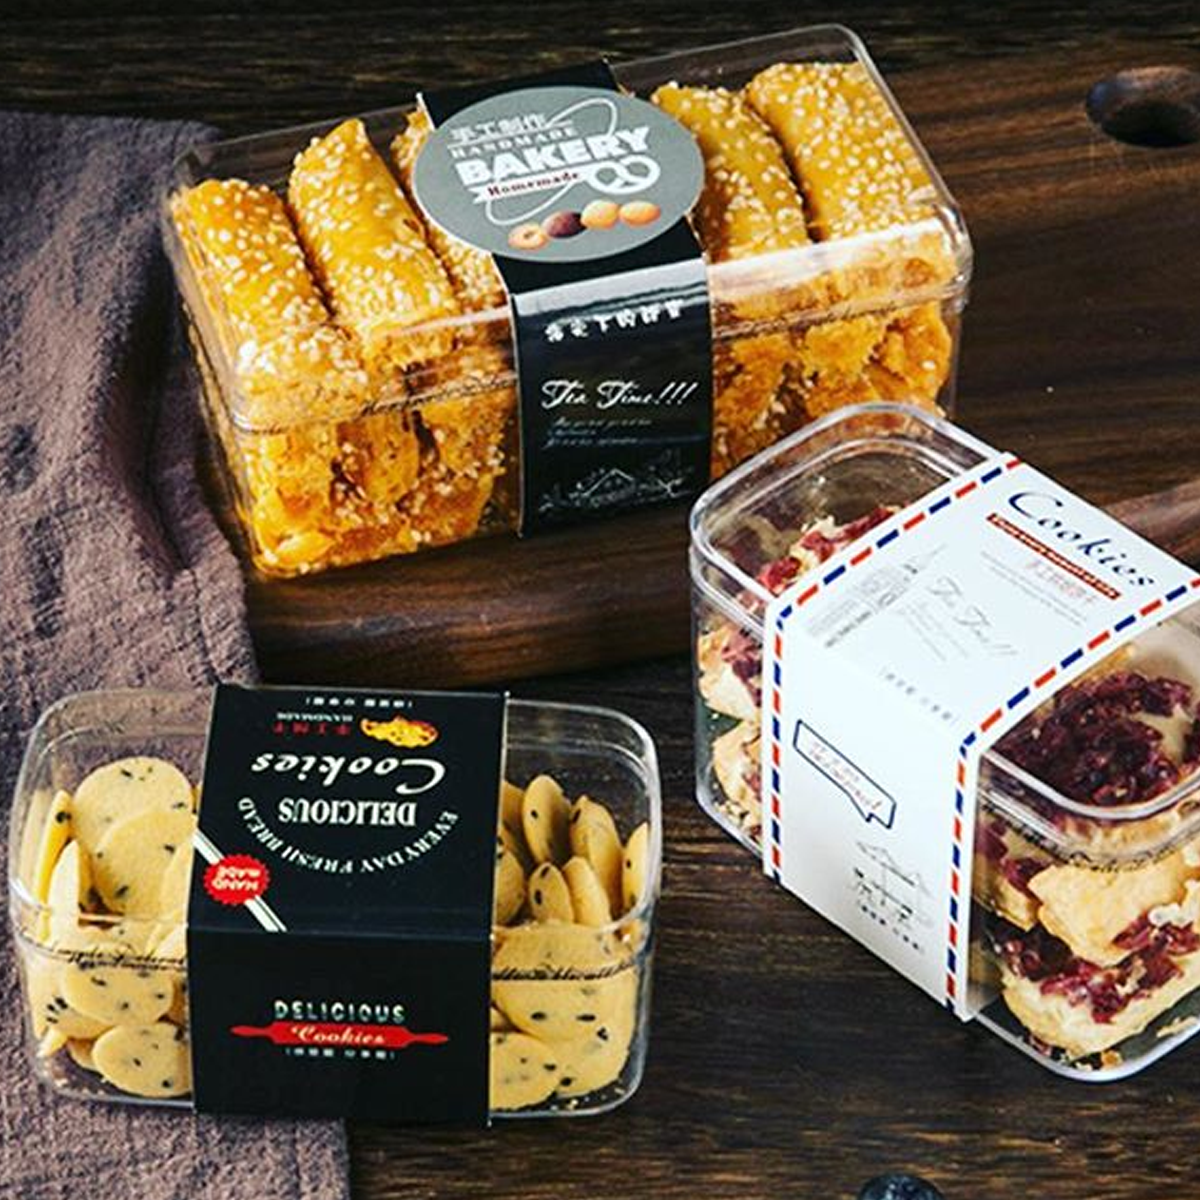 Plastic Food Grade PS Clear Cake DIY Cookies Box Biscuit Packing 50pcs/ Pack 12*6.3*5cm